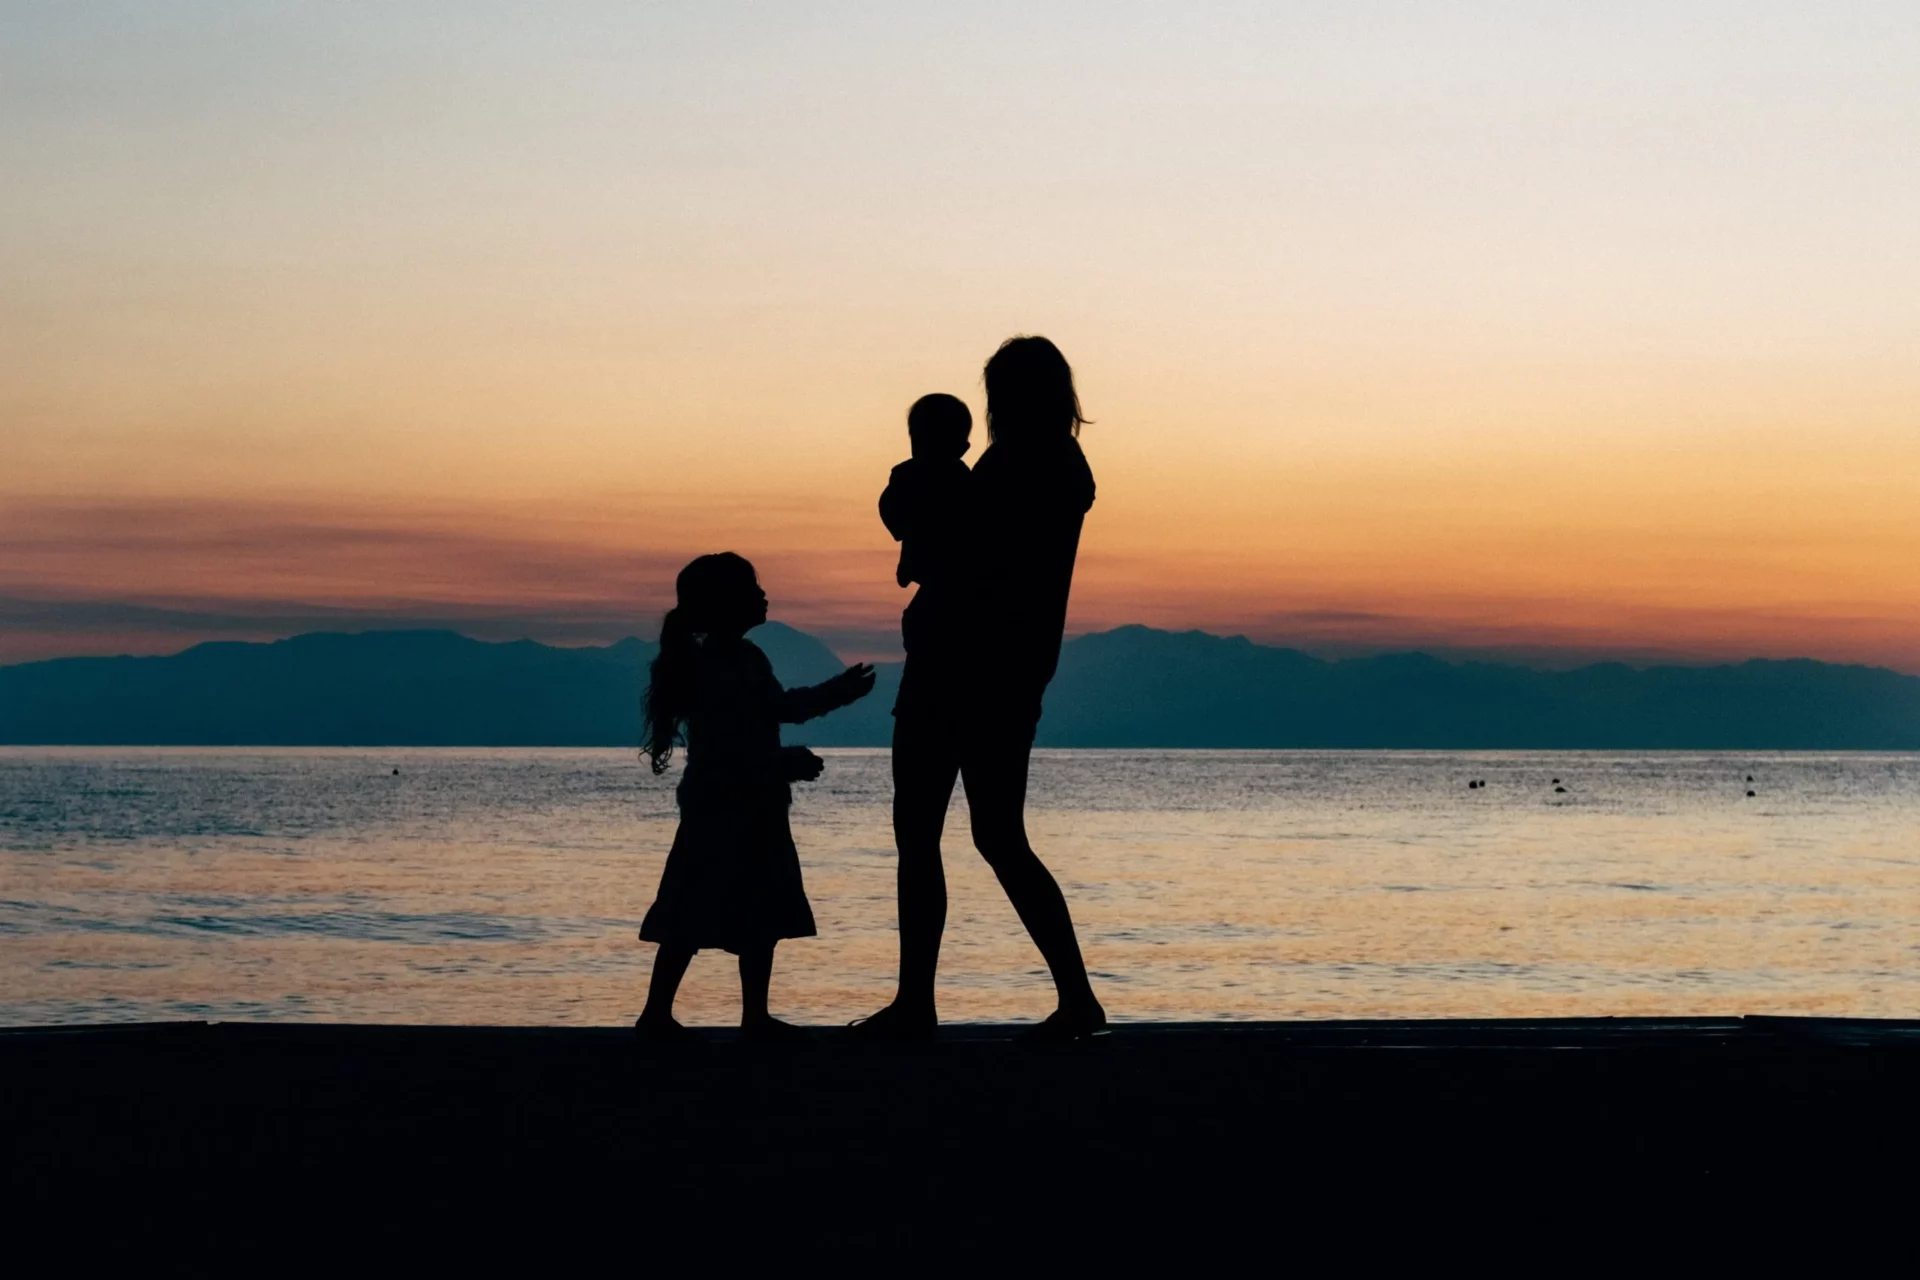 How can we tackle adoptive parent discrimination?